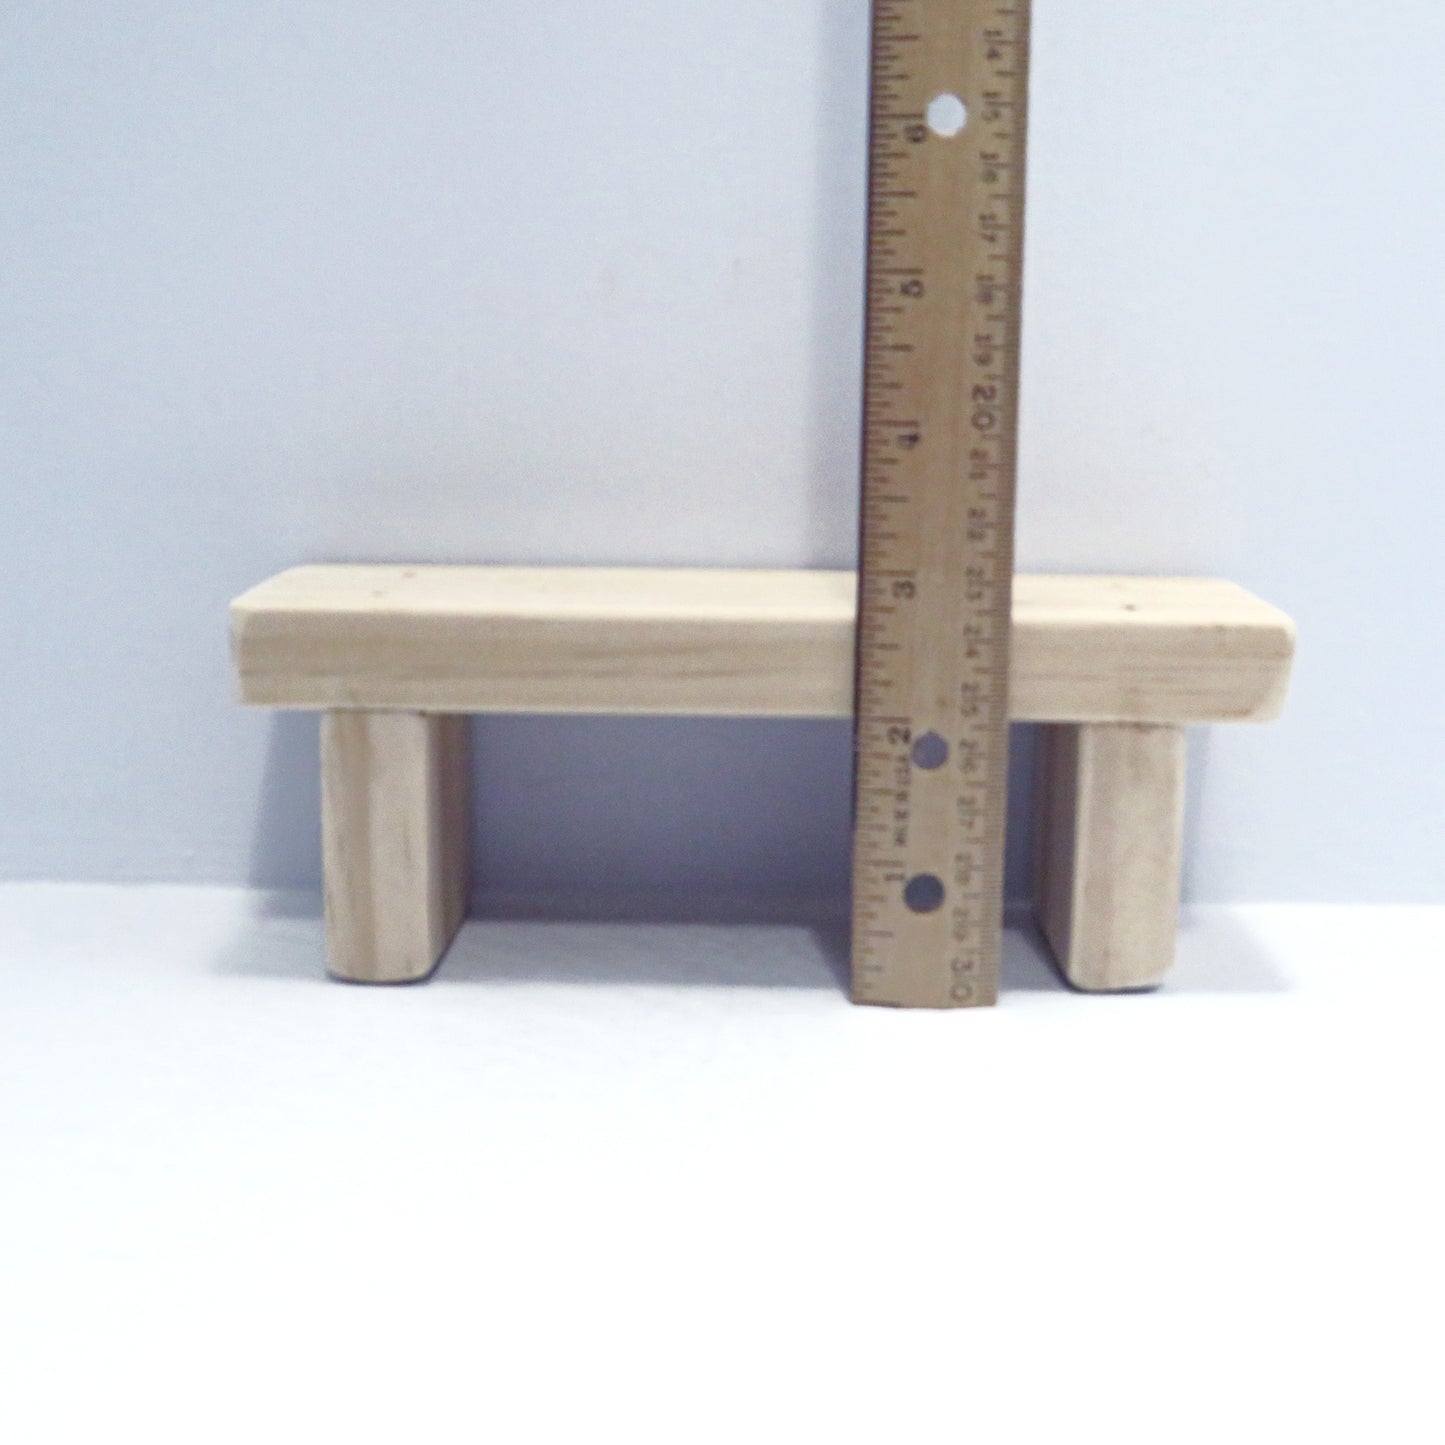 Wood Pedestal / Wood Display Bench / Display Bench / Wooden Pedestal